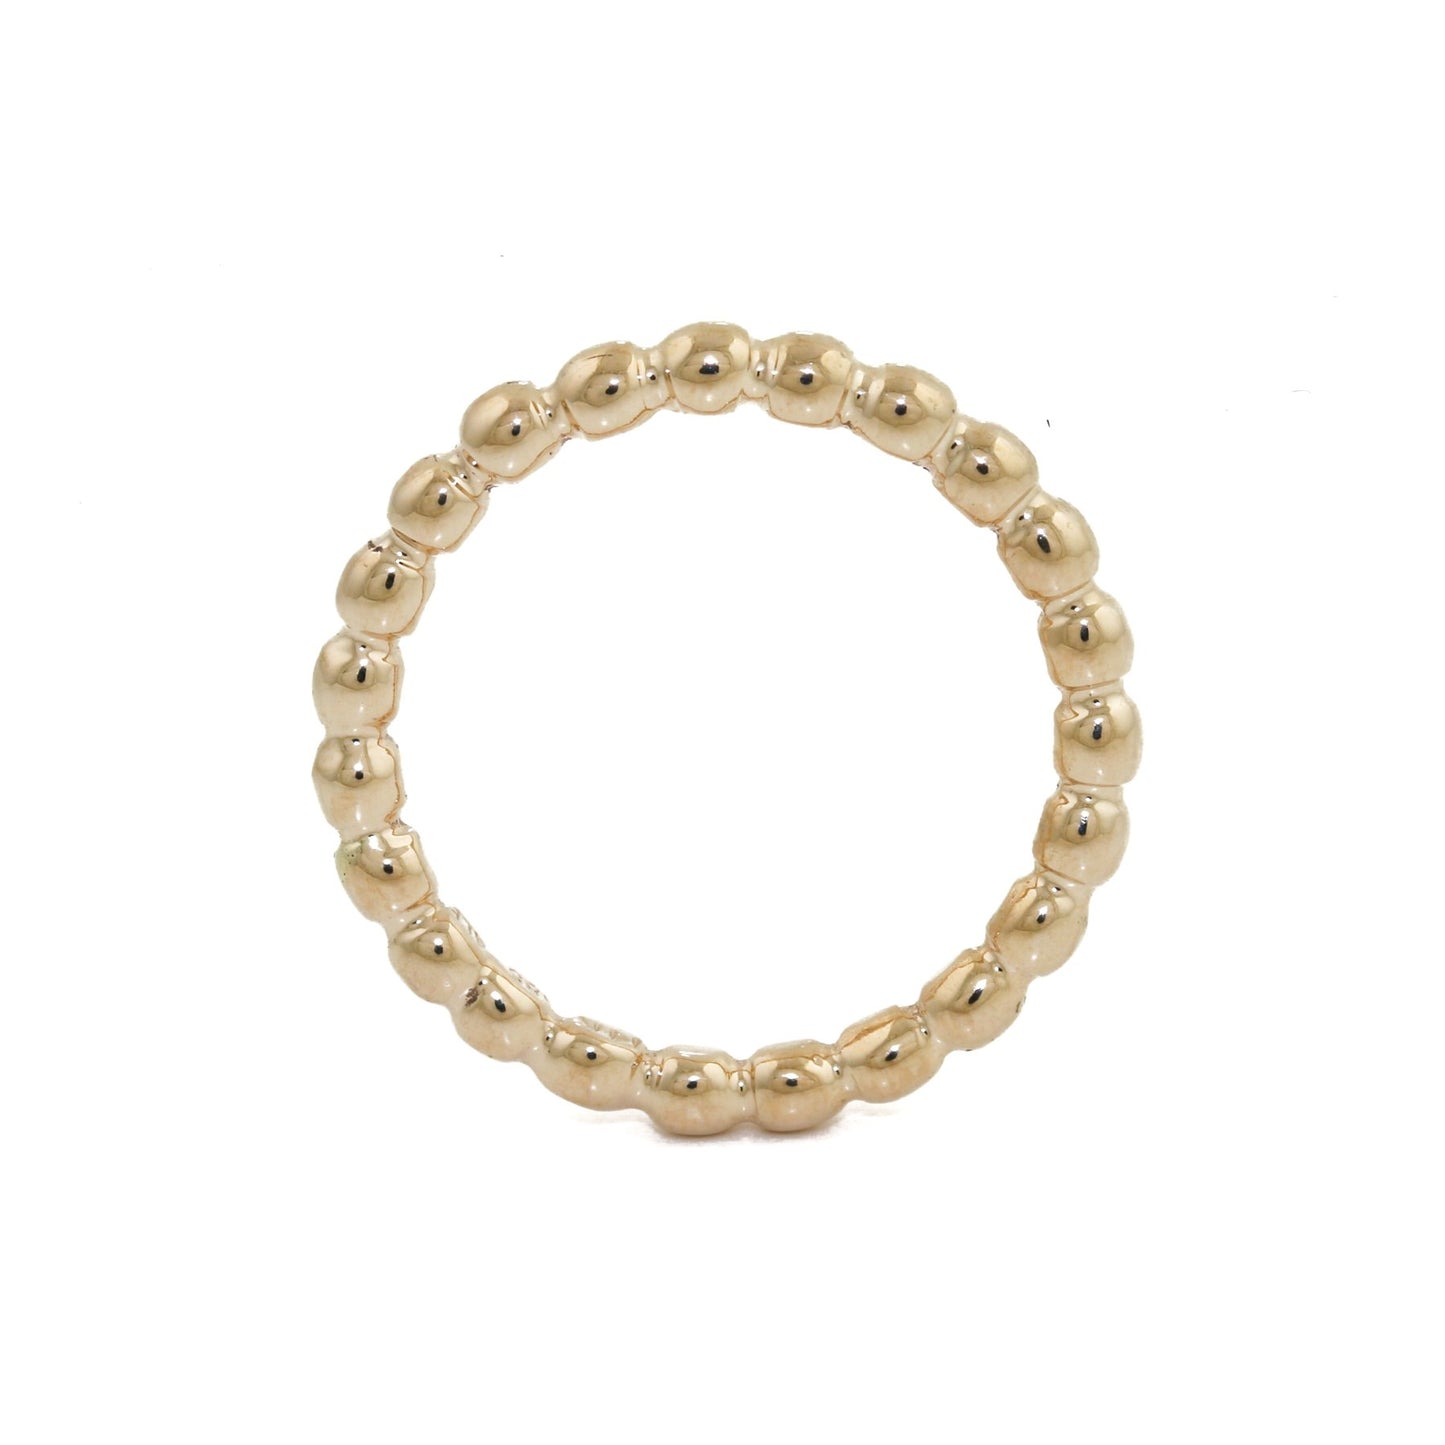 14k Gold Rope Band - Kingdom Jewelry